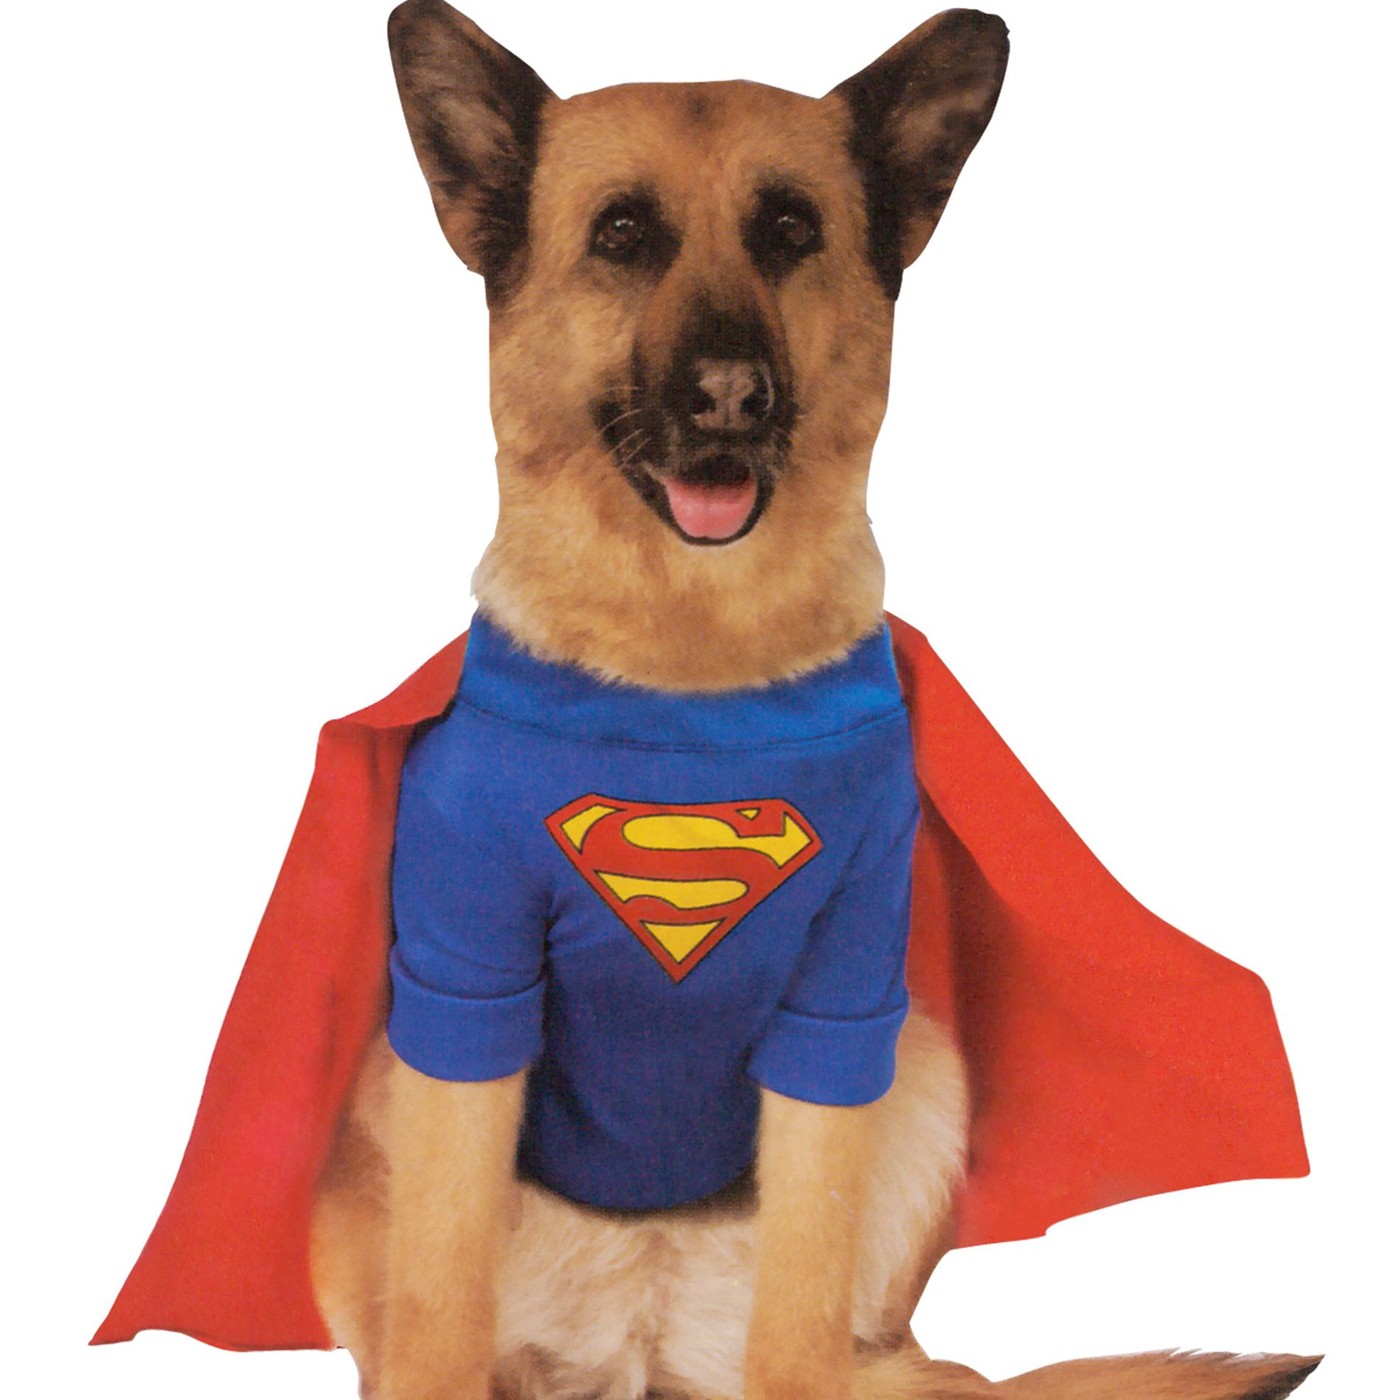 DC Comics Superman Pet Costume With Arms